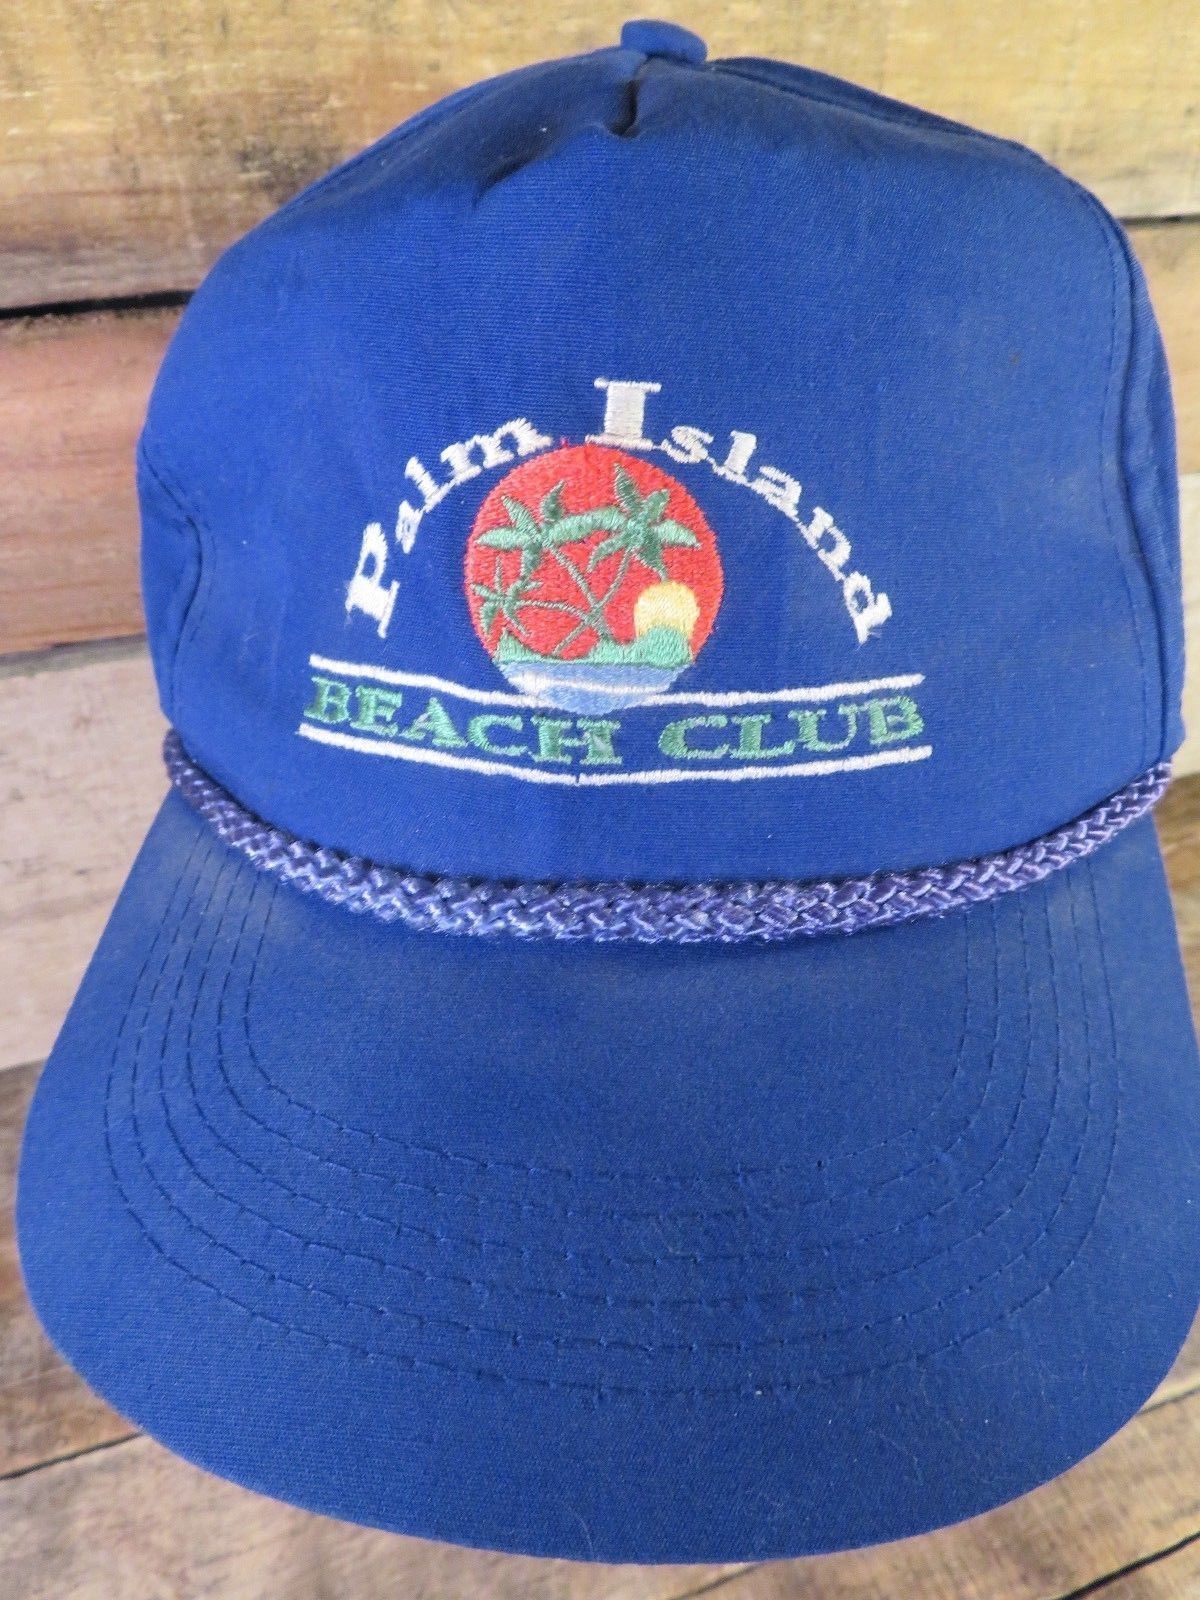 PALM ISLAND Beach Club Vintage Adjustable Adult Hat Cap - $22.27